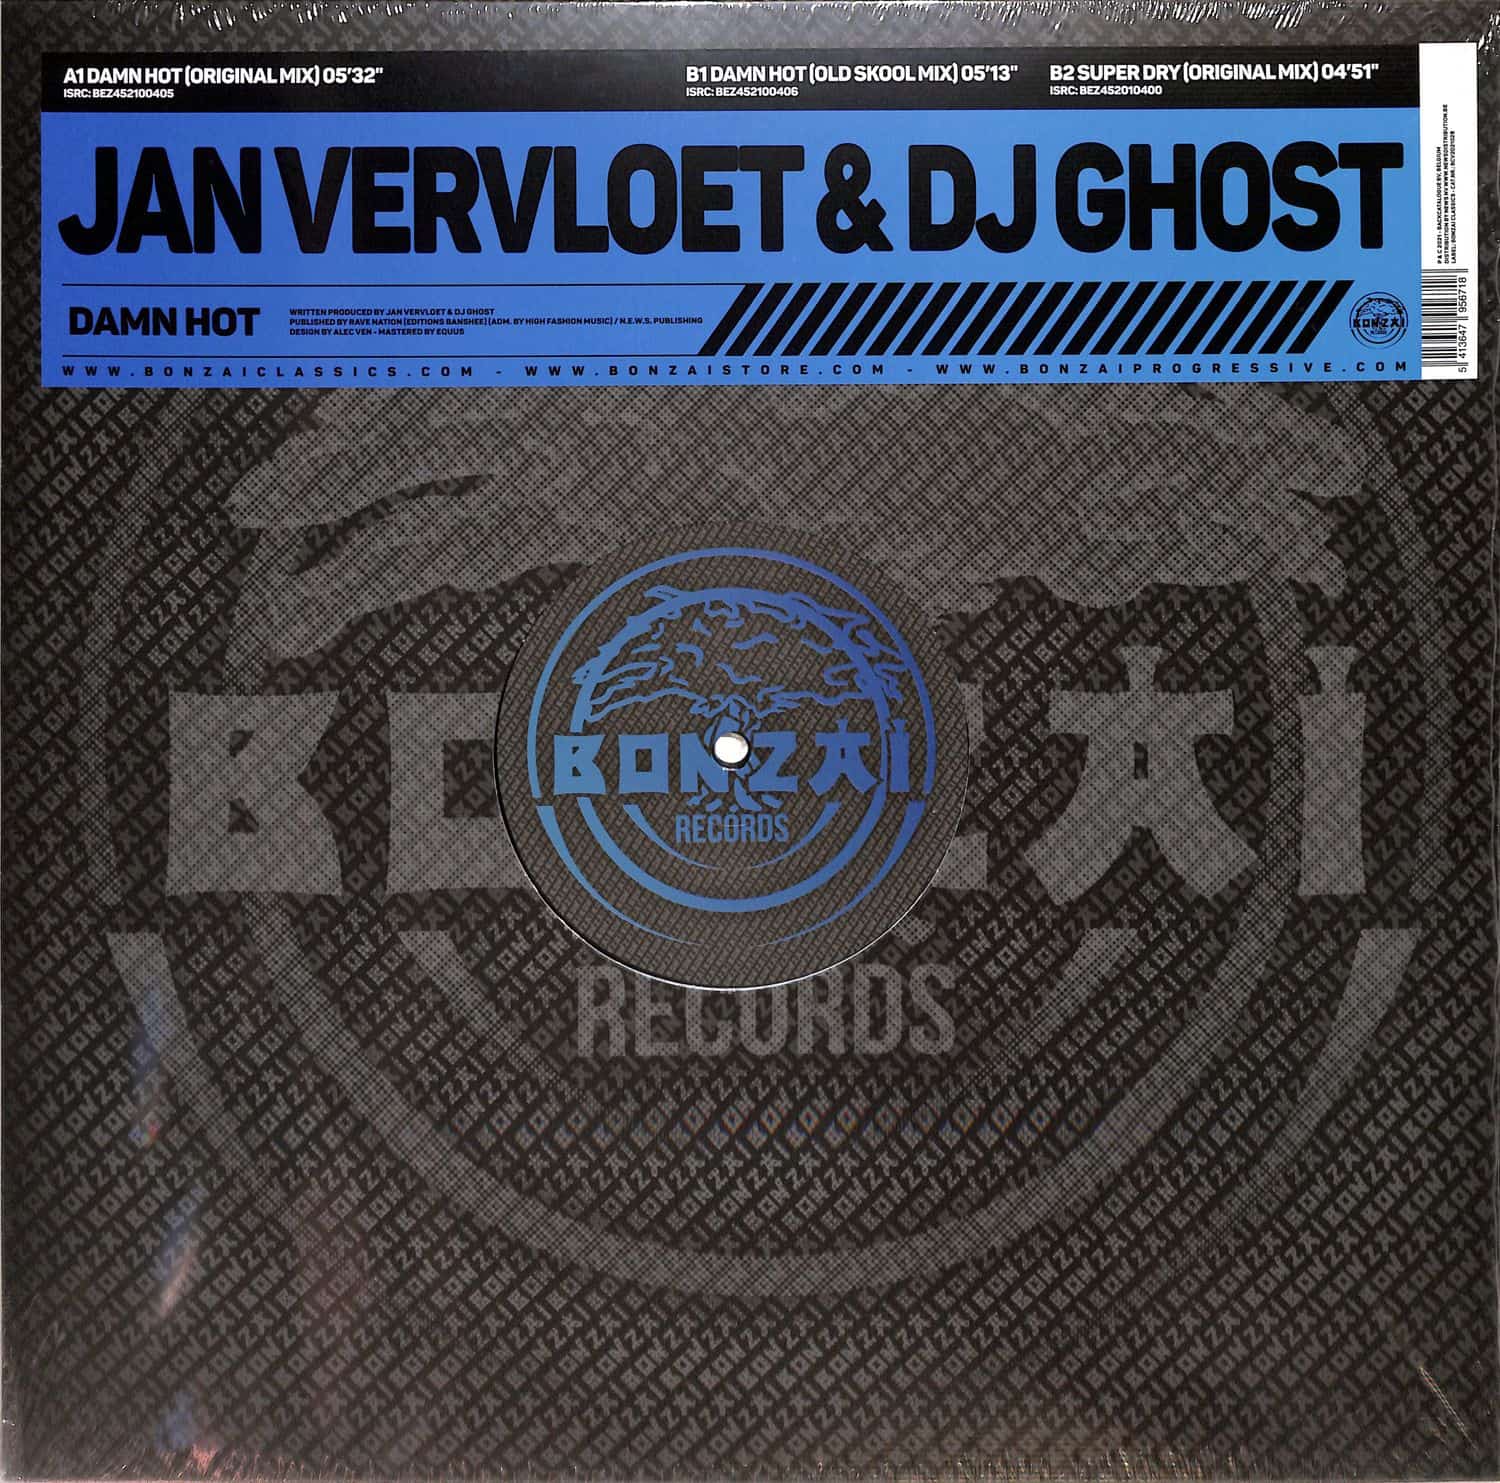 Jan Vervloet & DJ Ghost - DAMN HOT